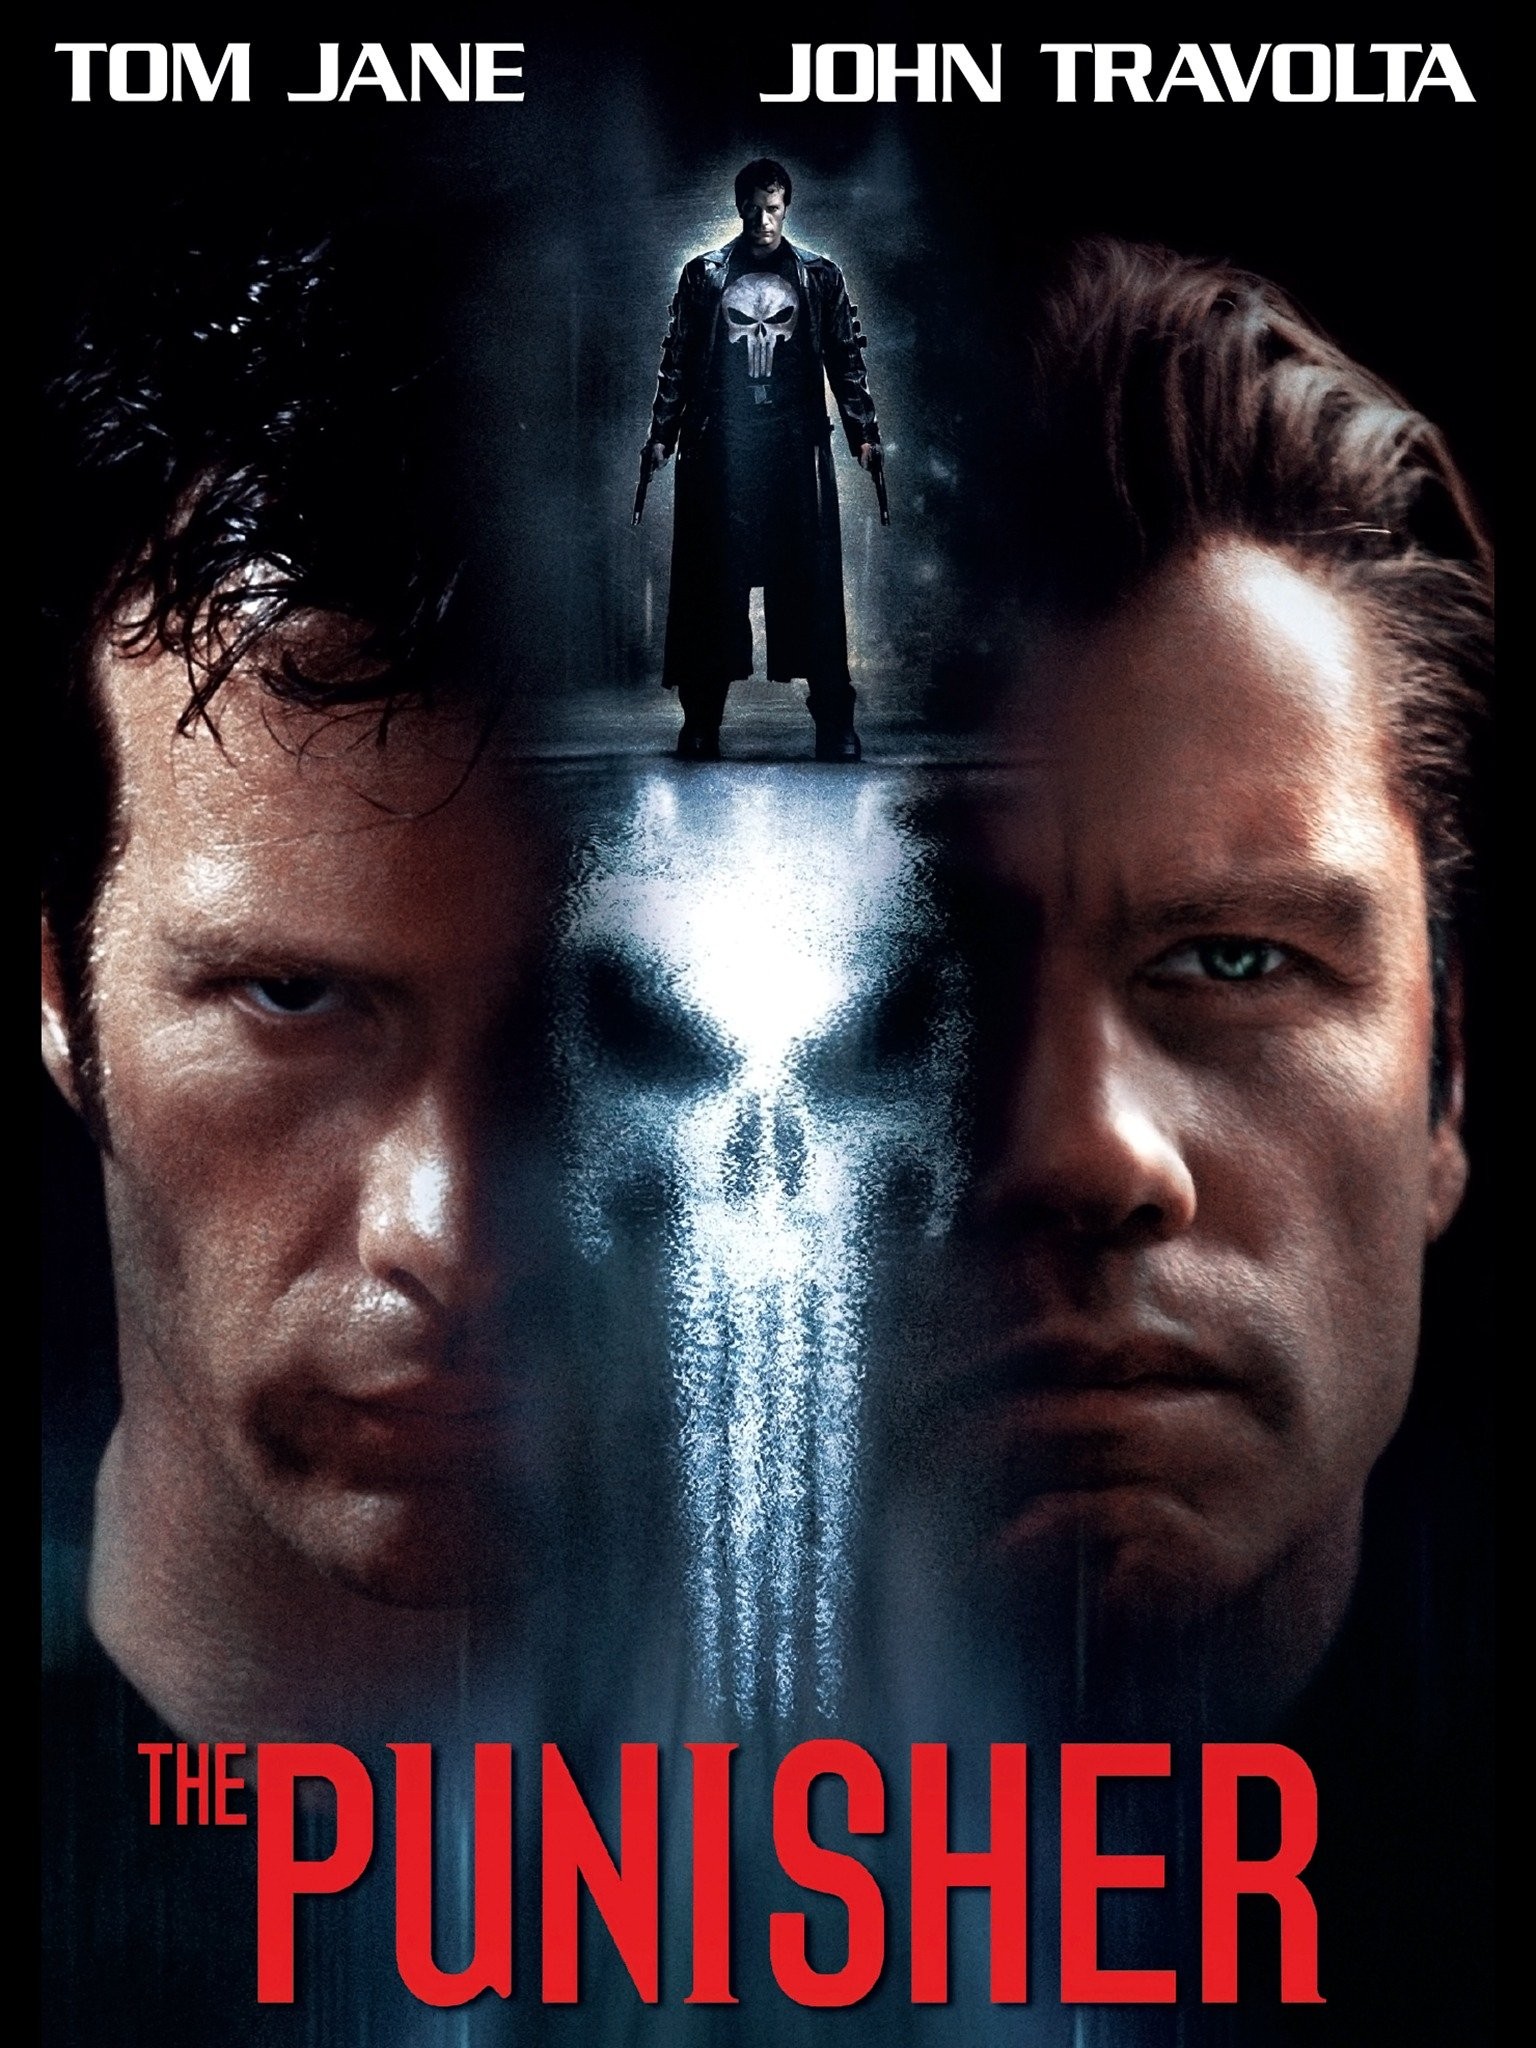 The Punisher (2000 series) - Wikipedia